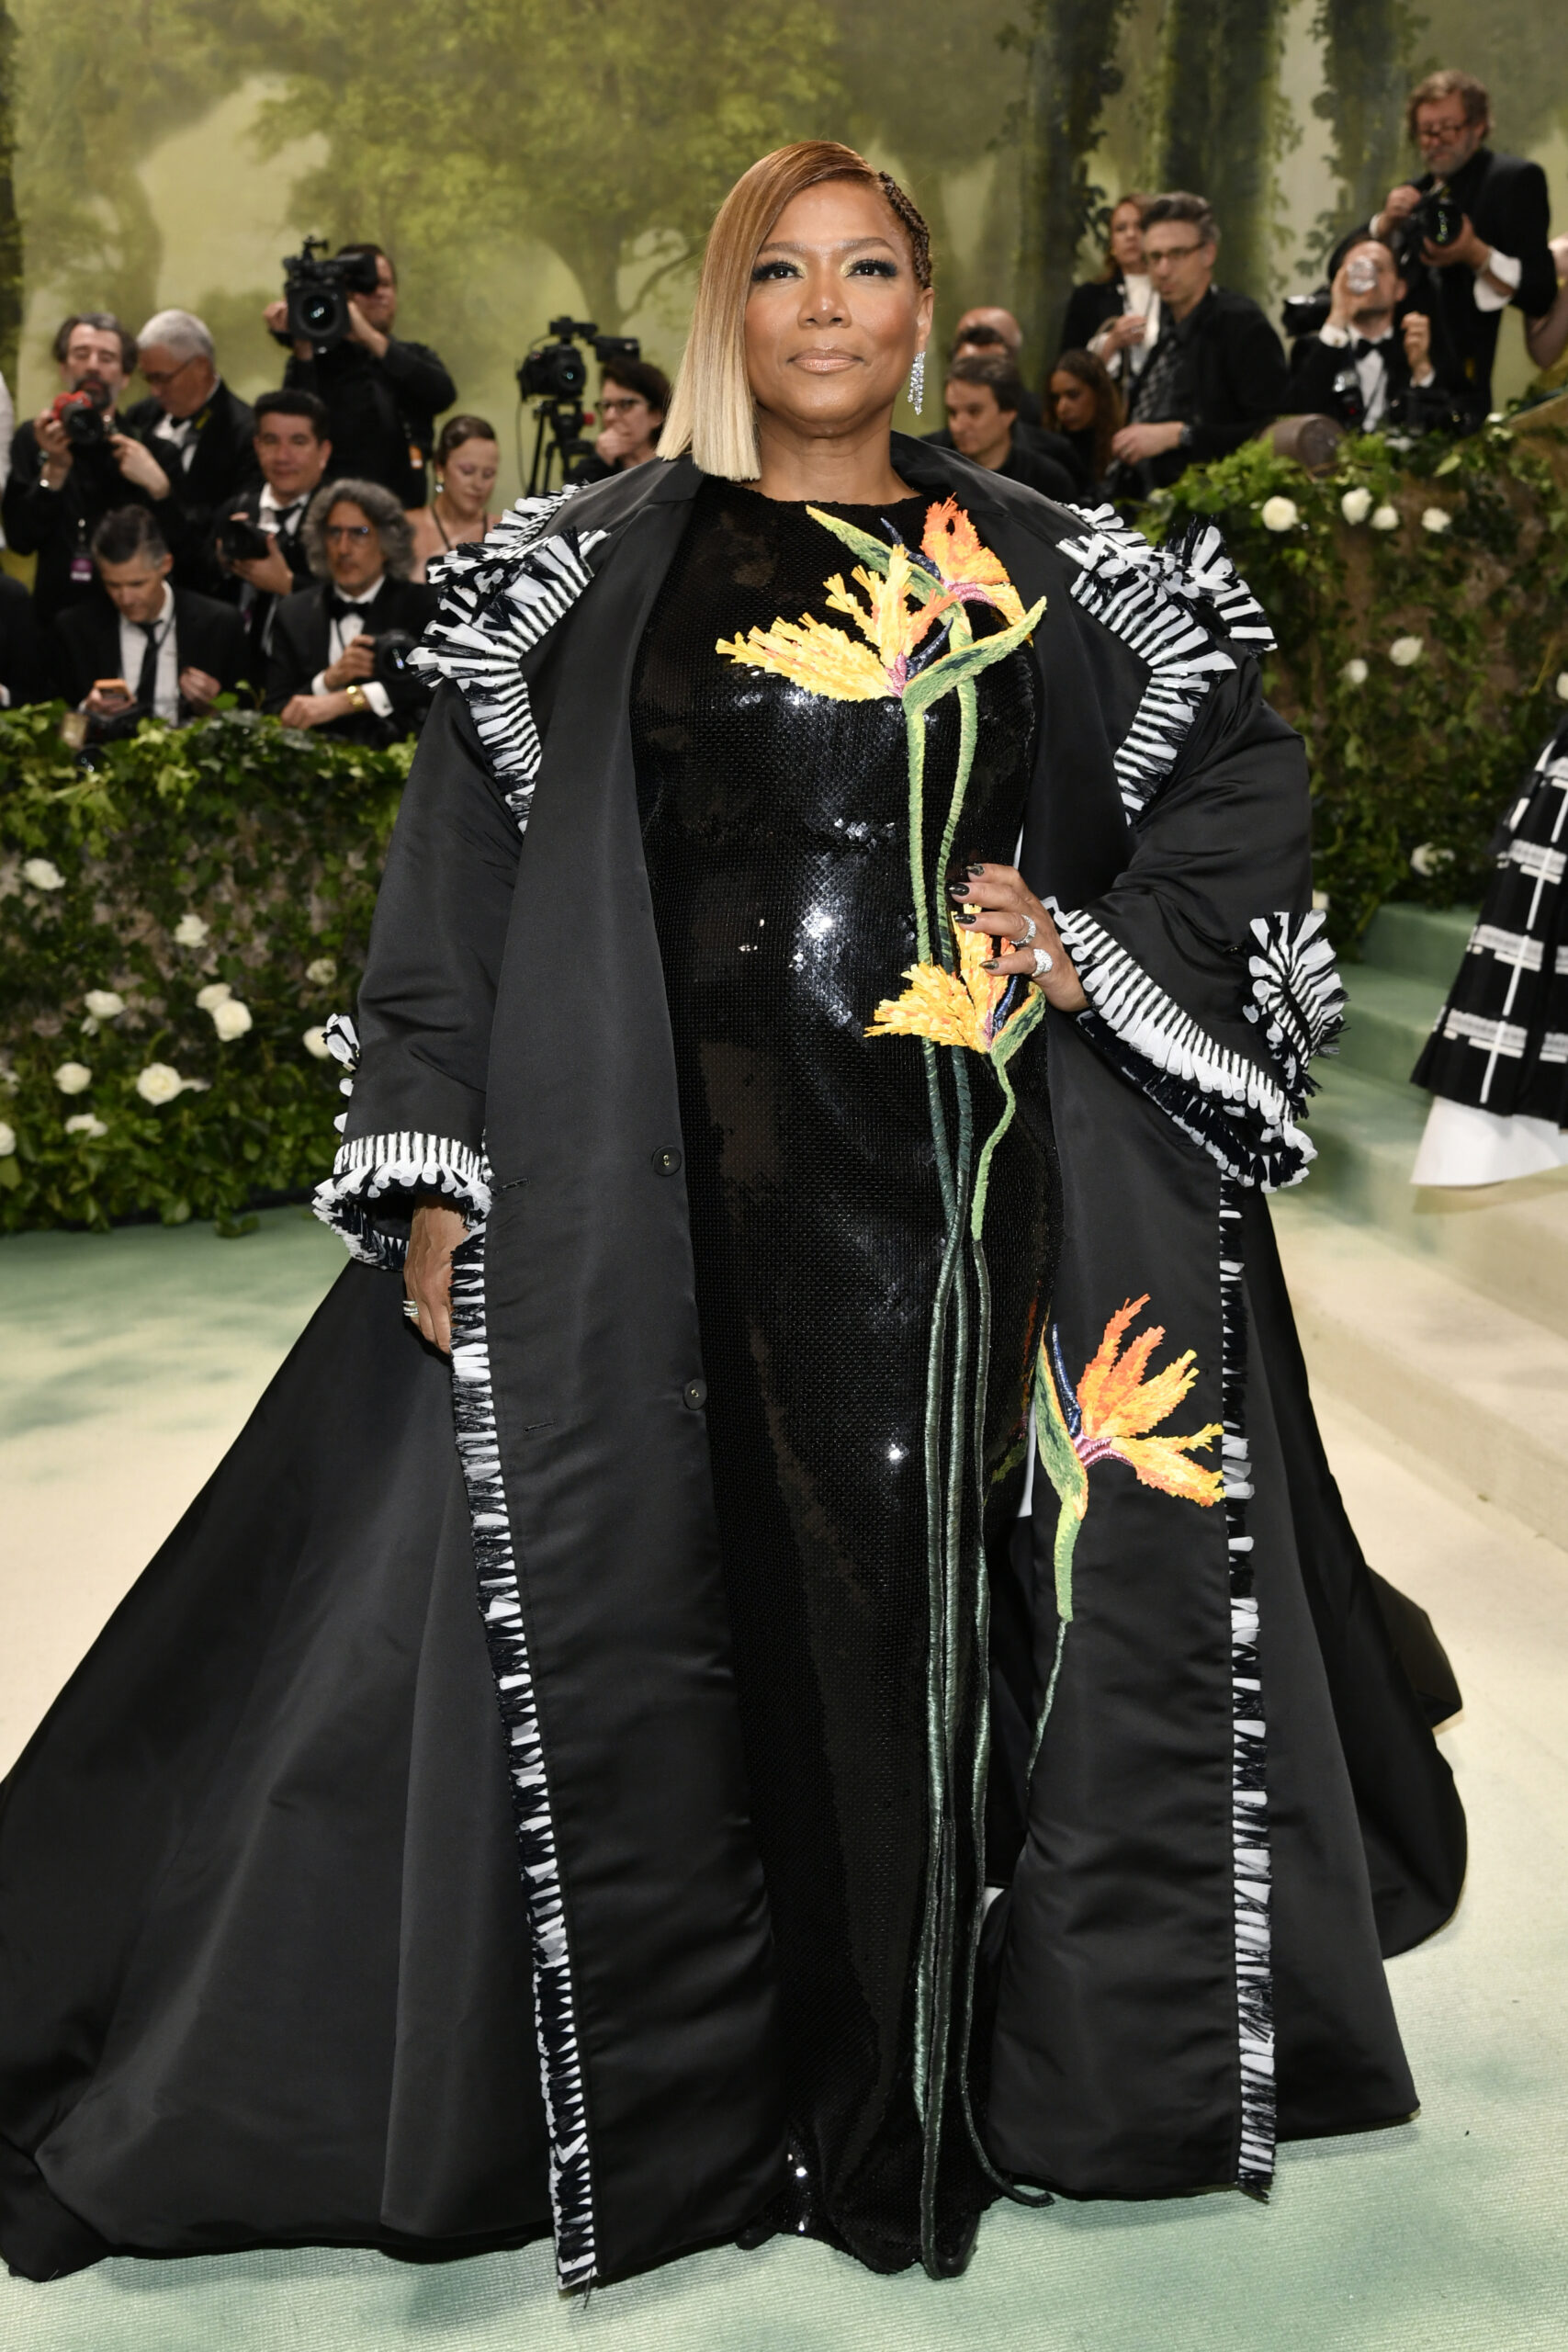 Queen Latifah. Photo credit: Evan Agostini/Invision/The Associated Press